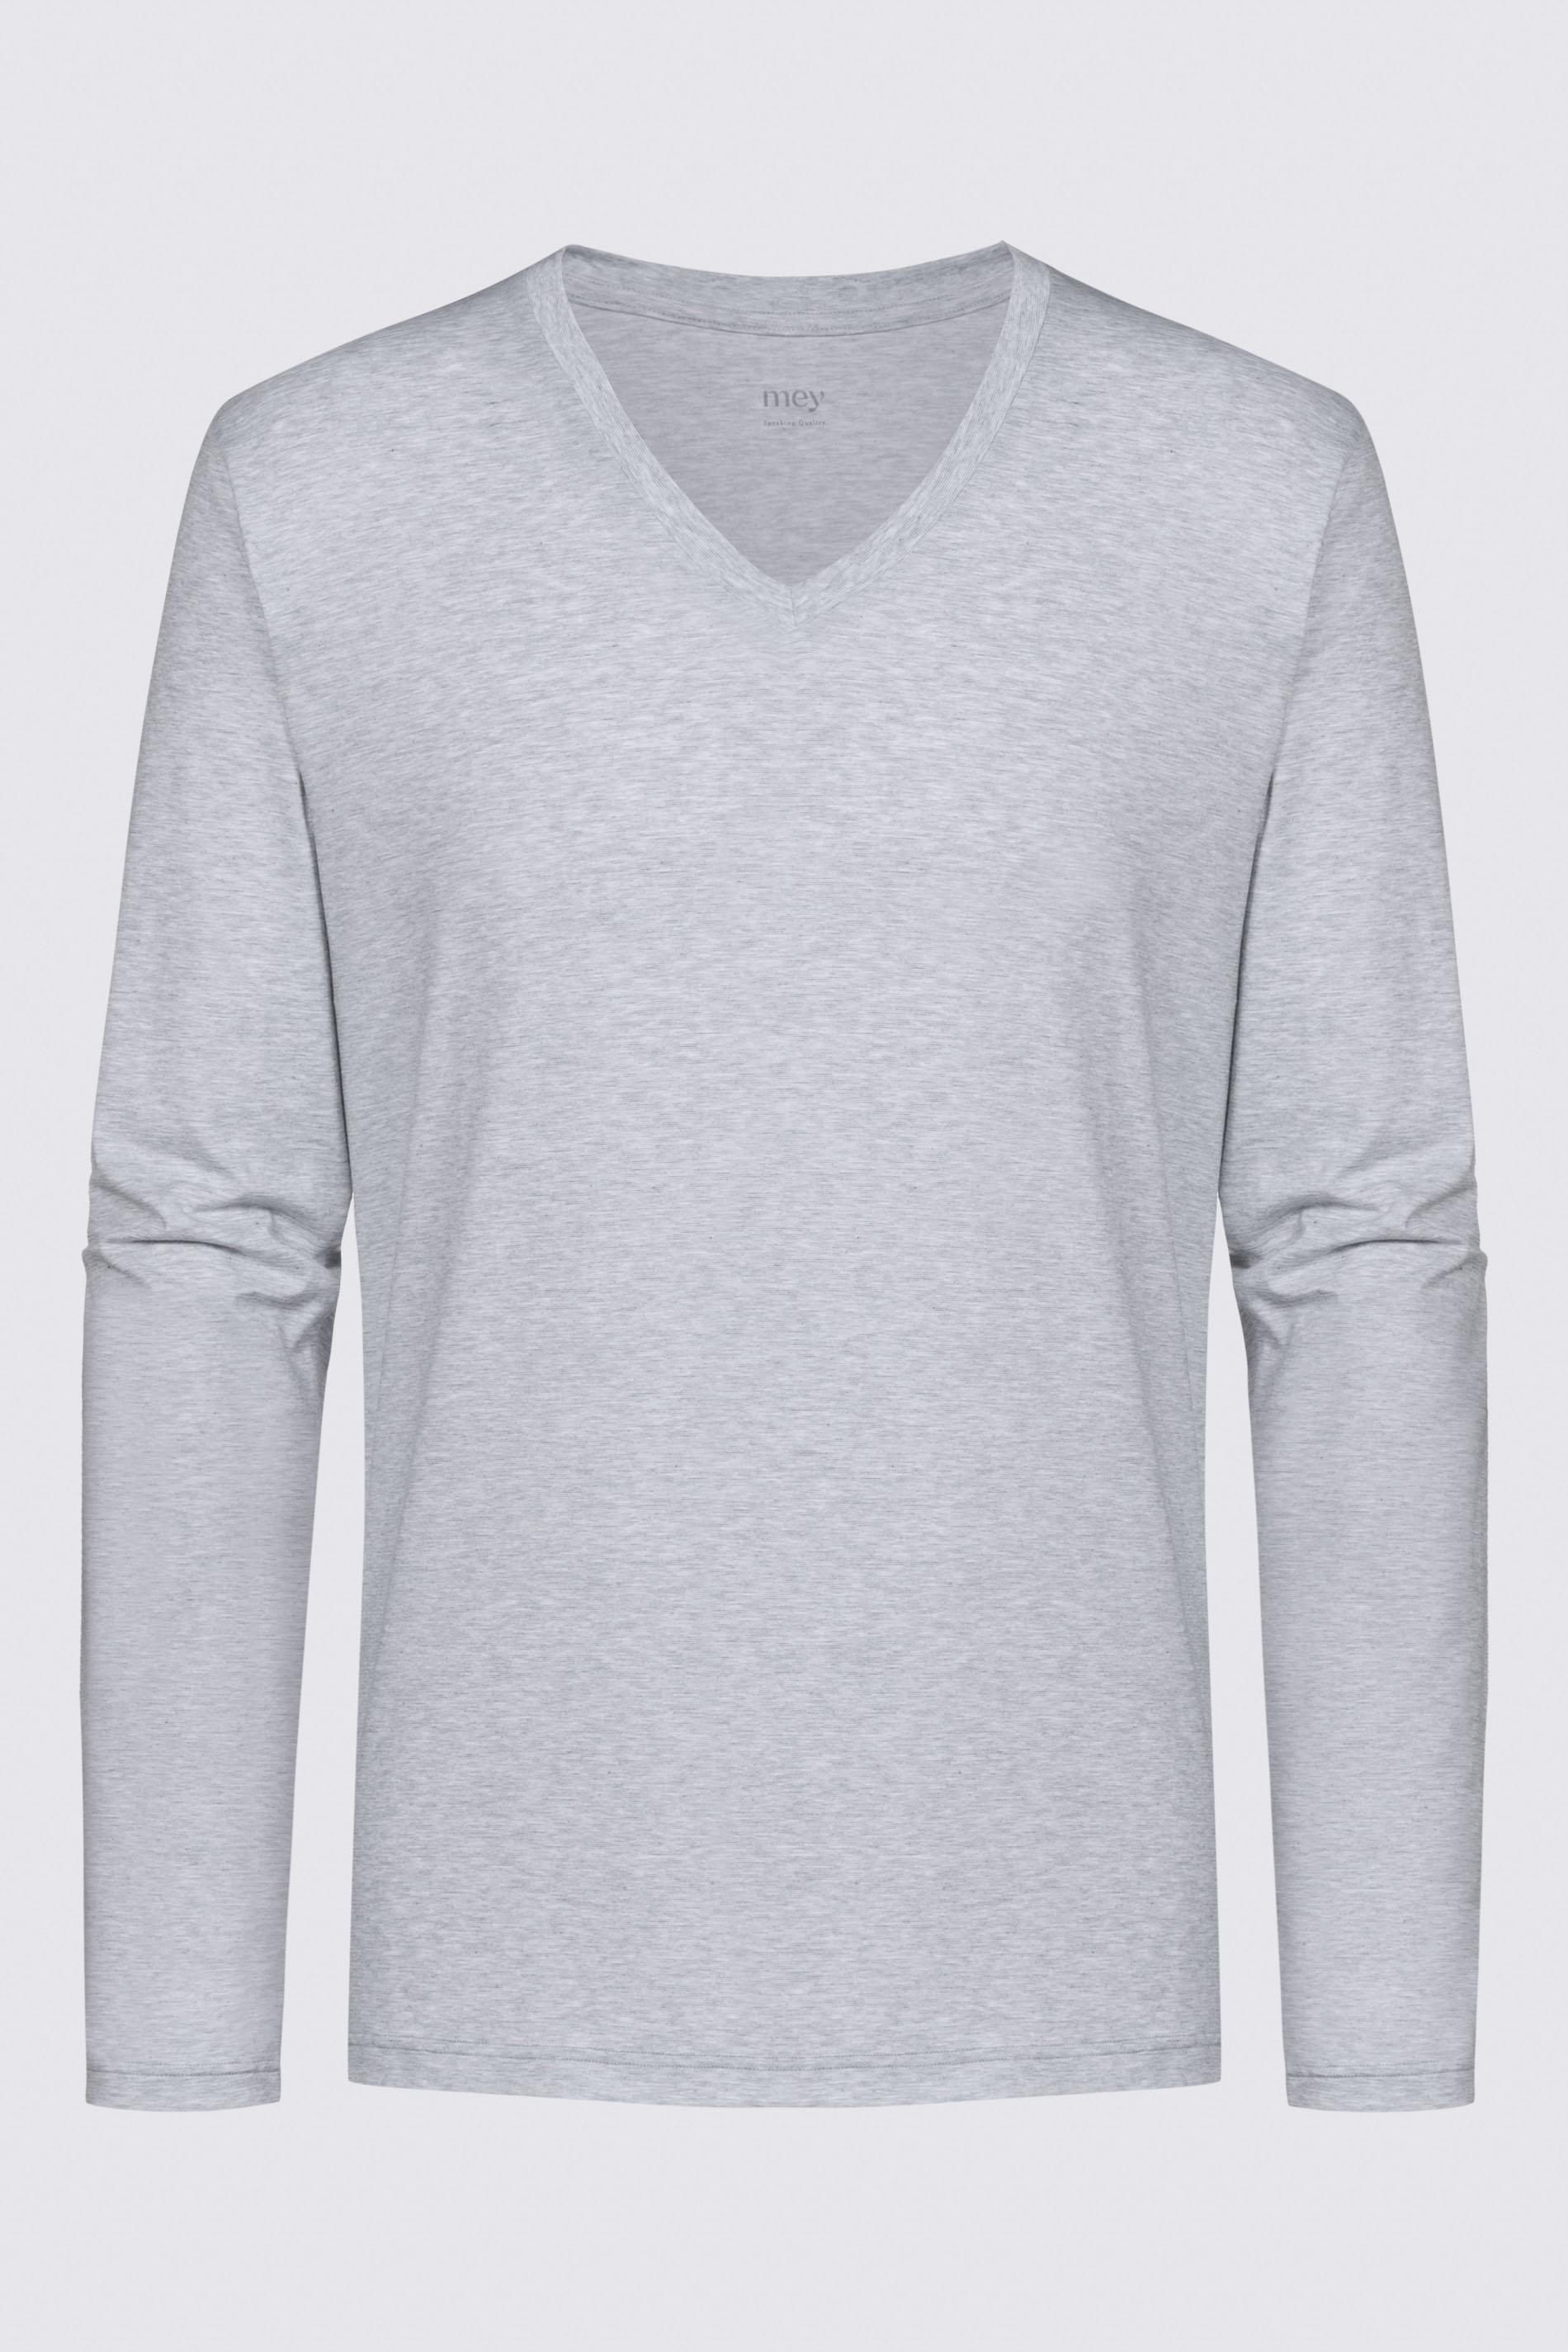 Langarm-Shirt Dry Cotton Colour Freisteller | mey®